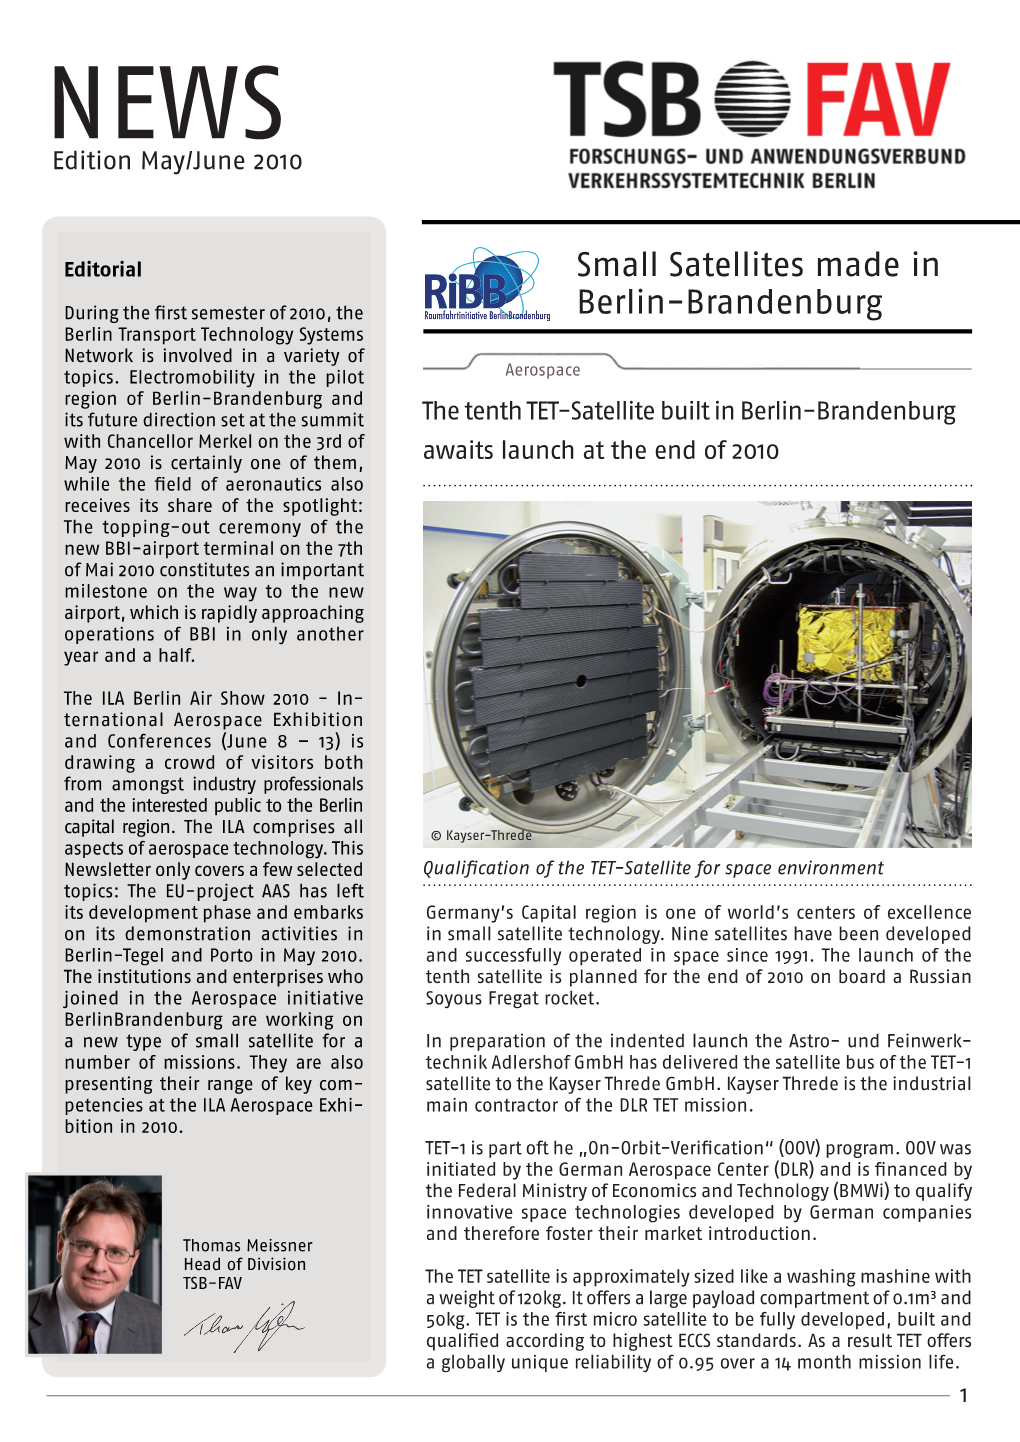 Small Satellites Made in Berlin-Brandenburg